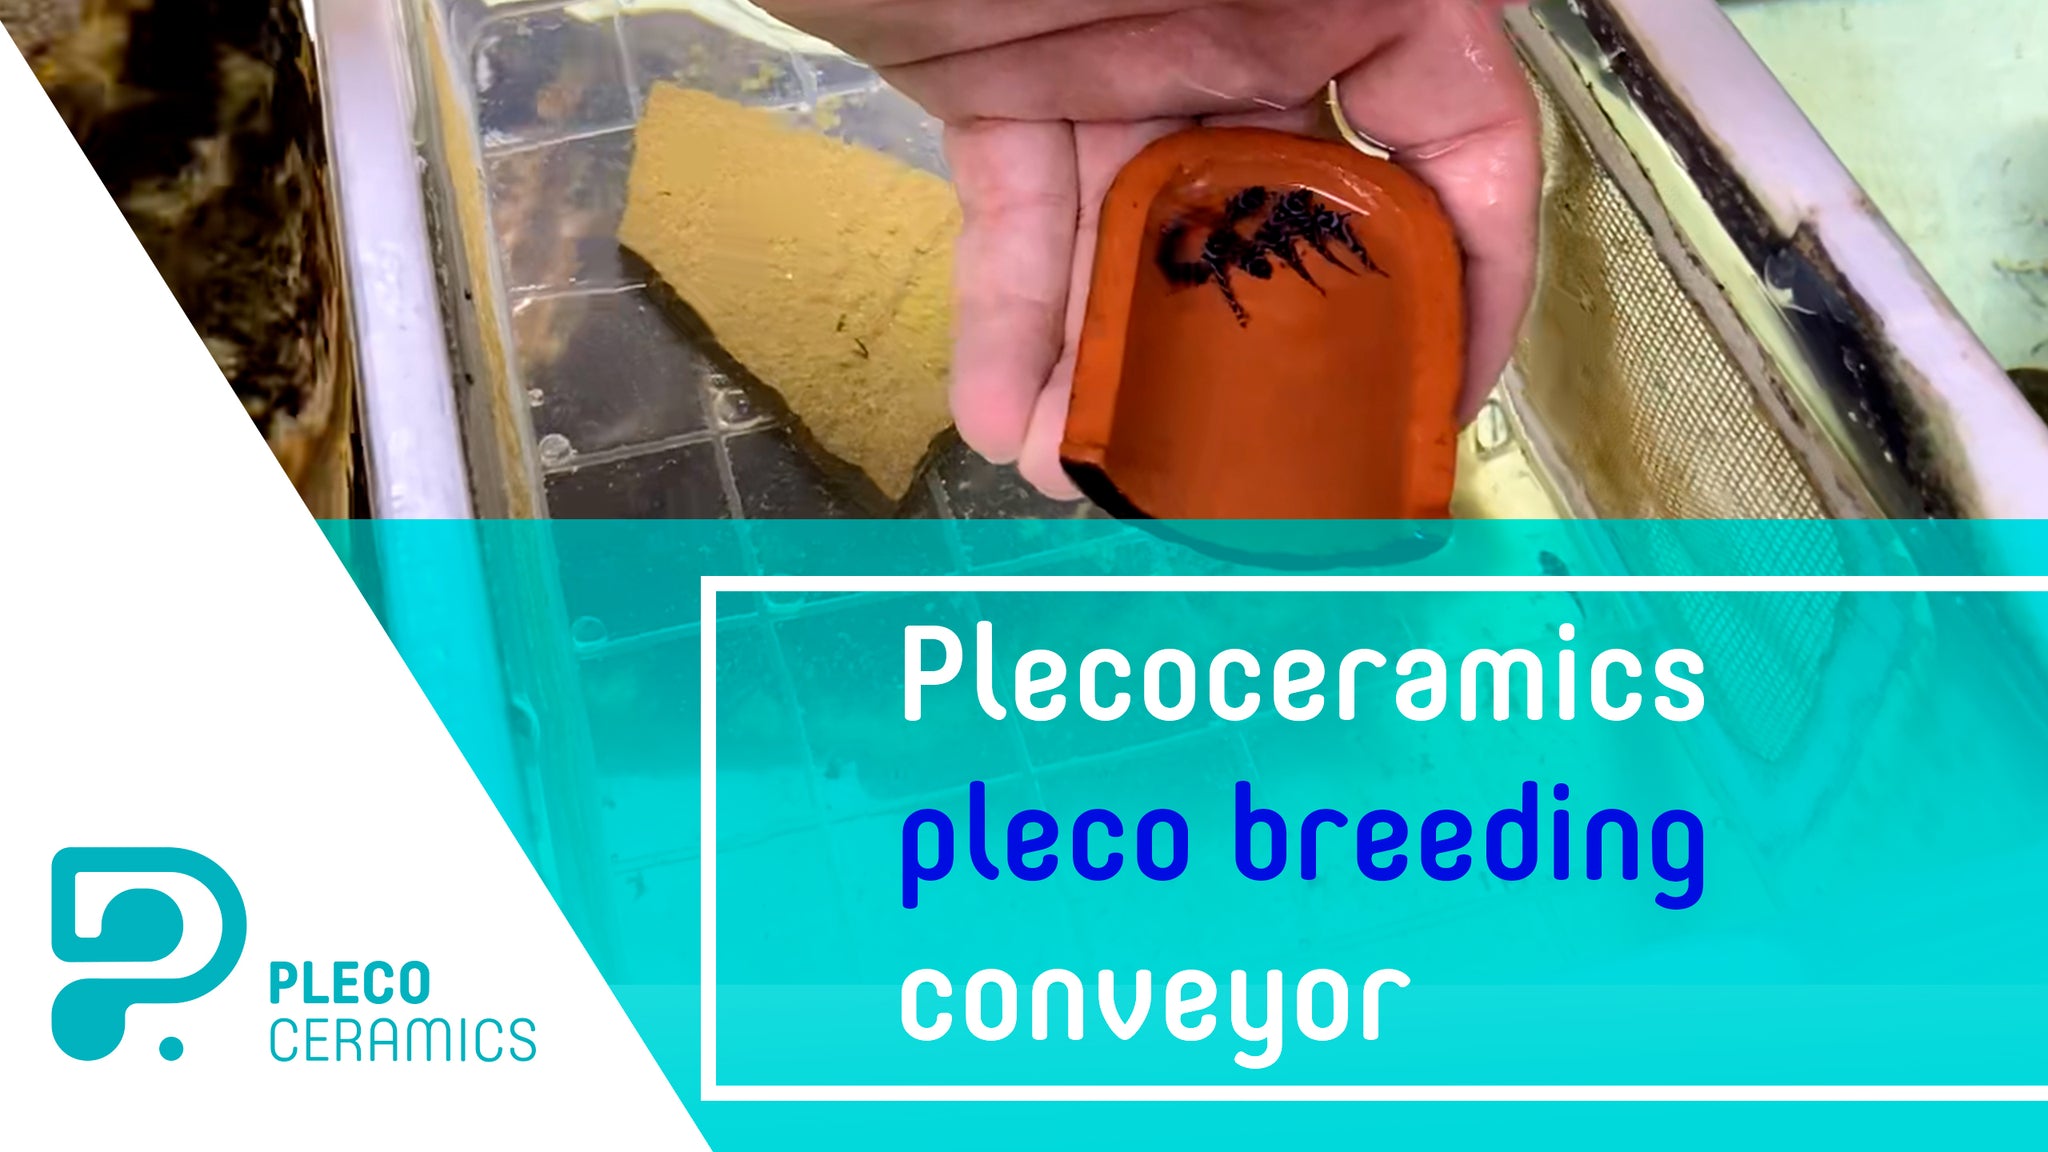 Plecoceramics pleco breeding conveyor